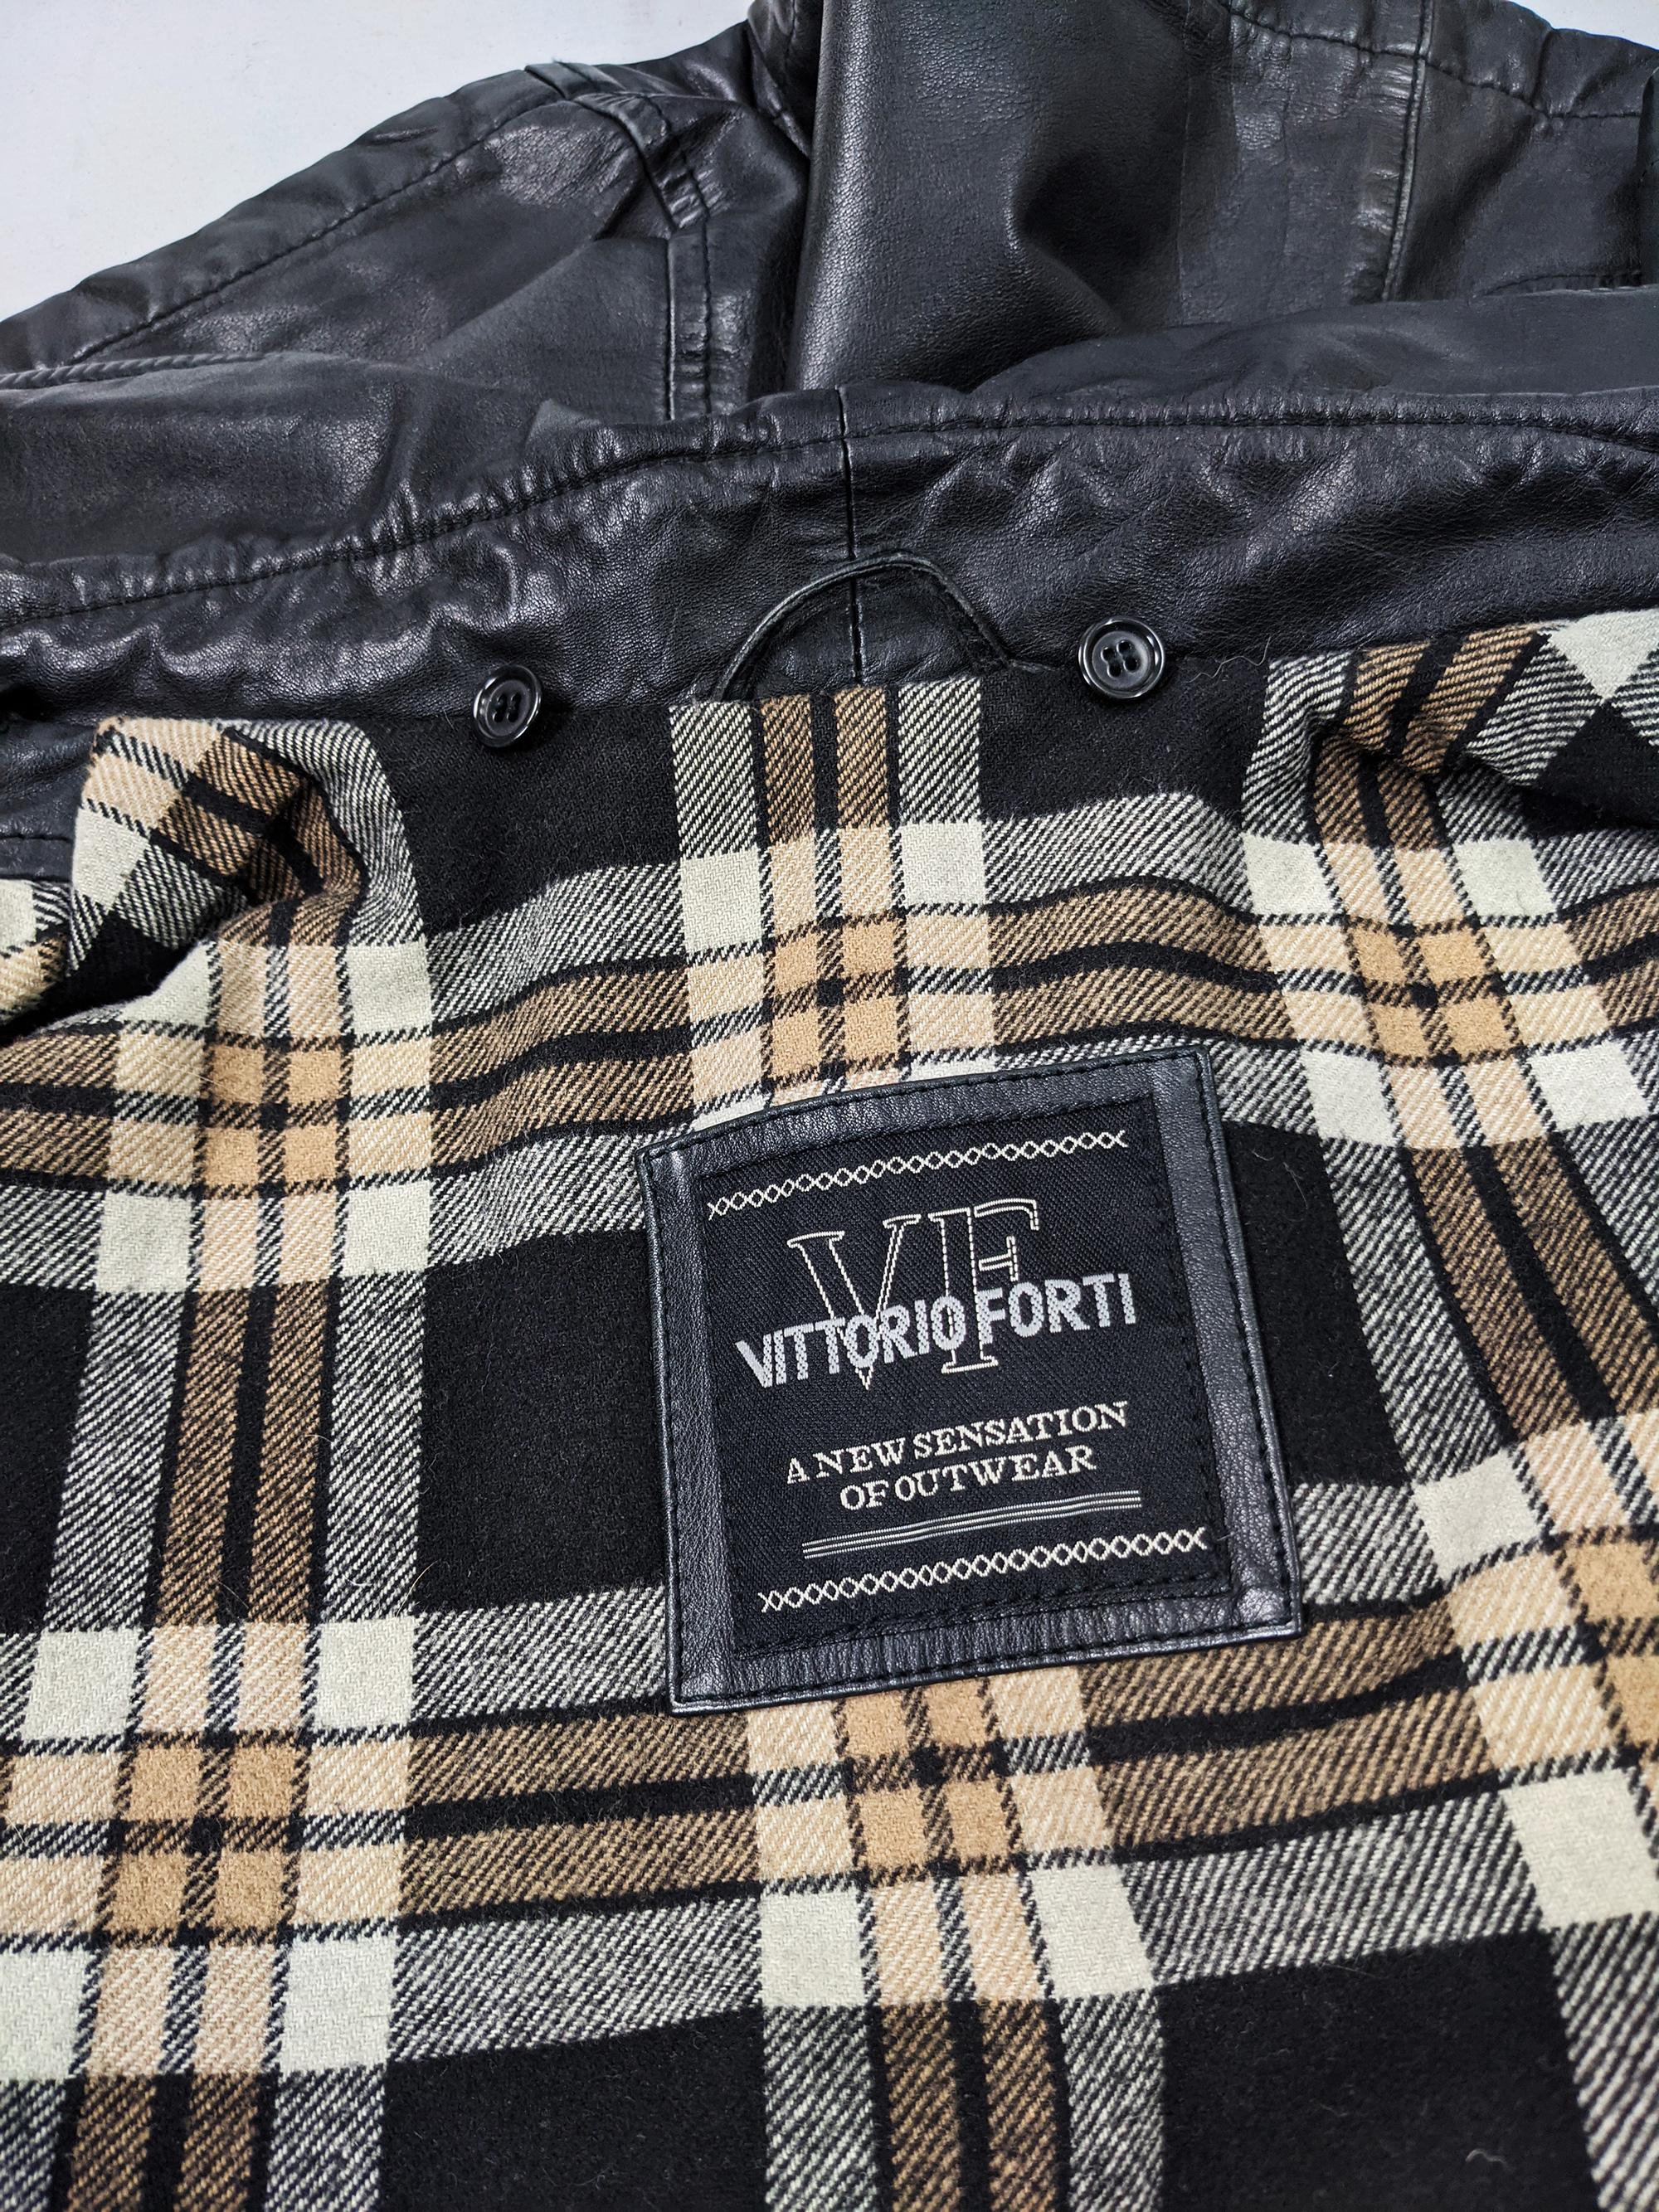 Vittorio Forti Mens Vintage Black Leather Coat 2